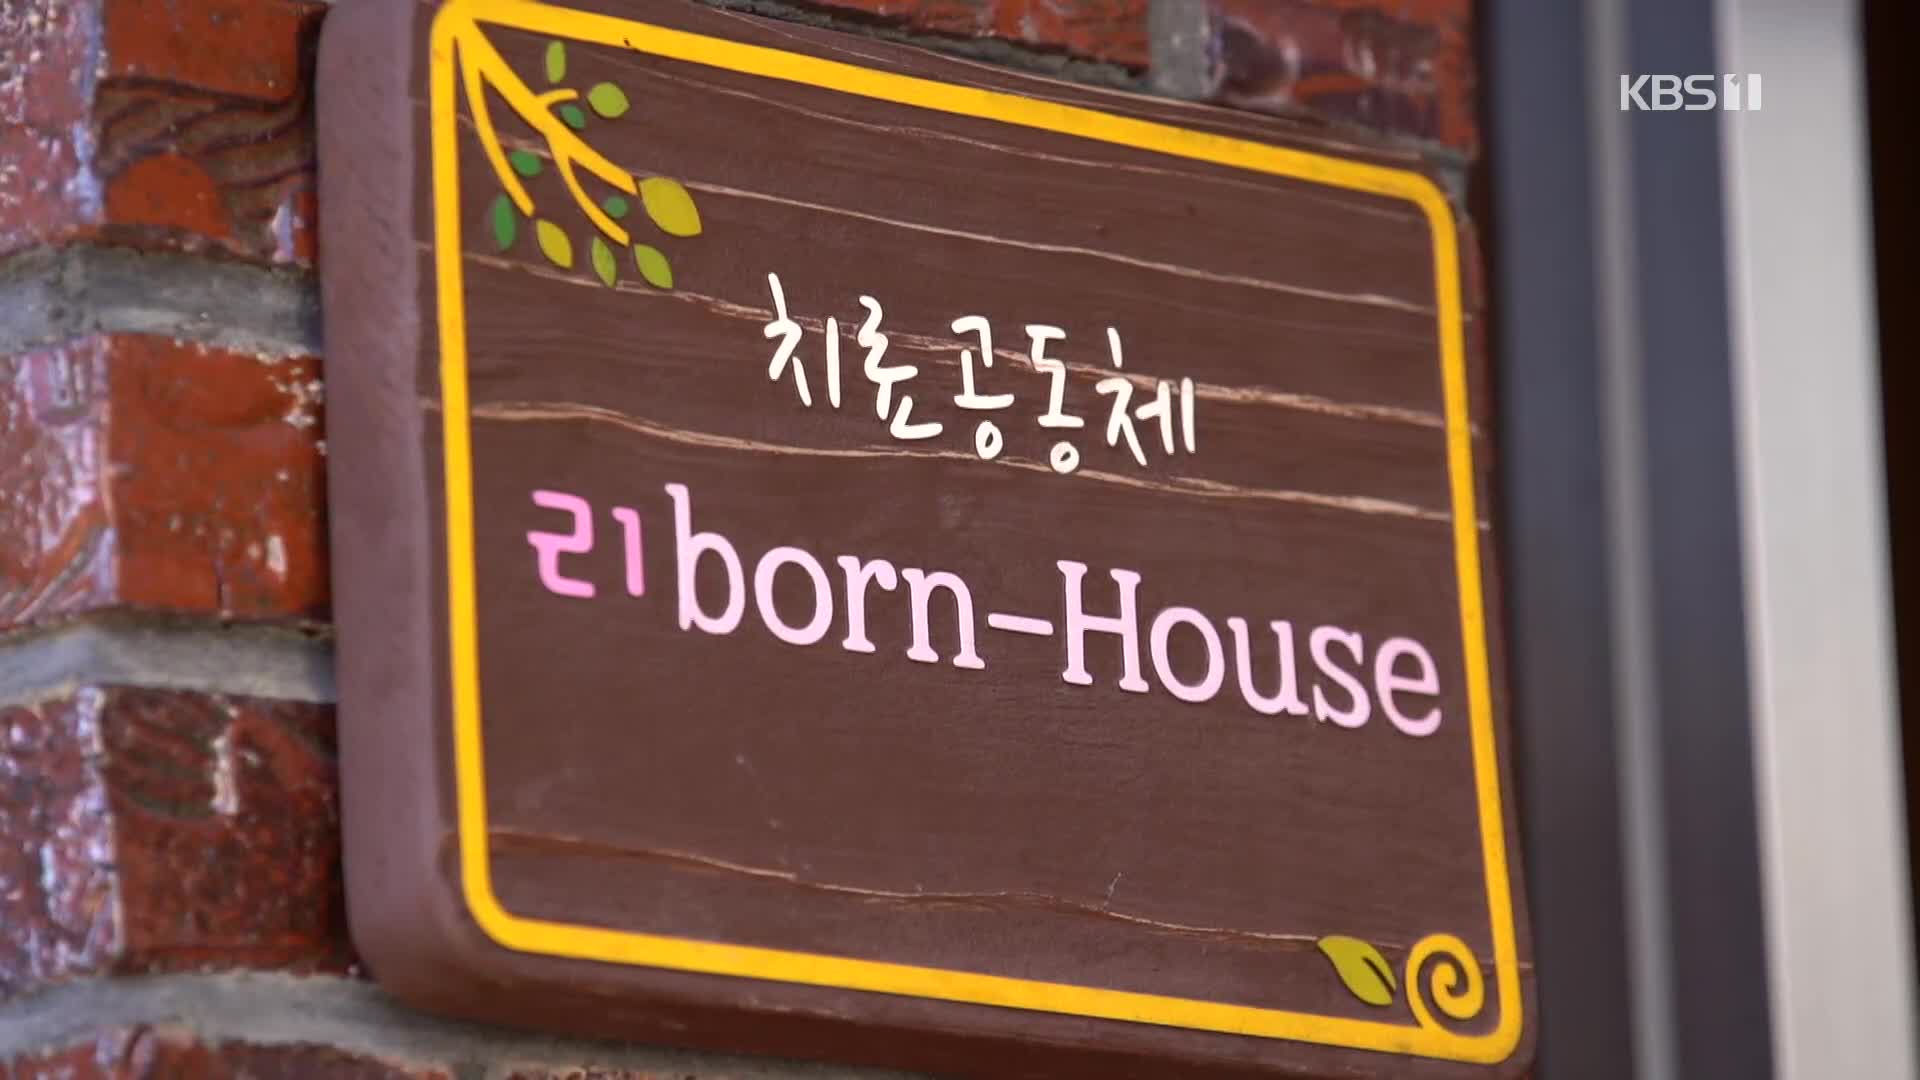 [Deep] 리본(Re: born)하우스